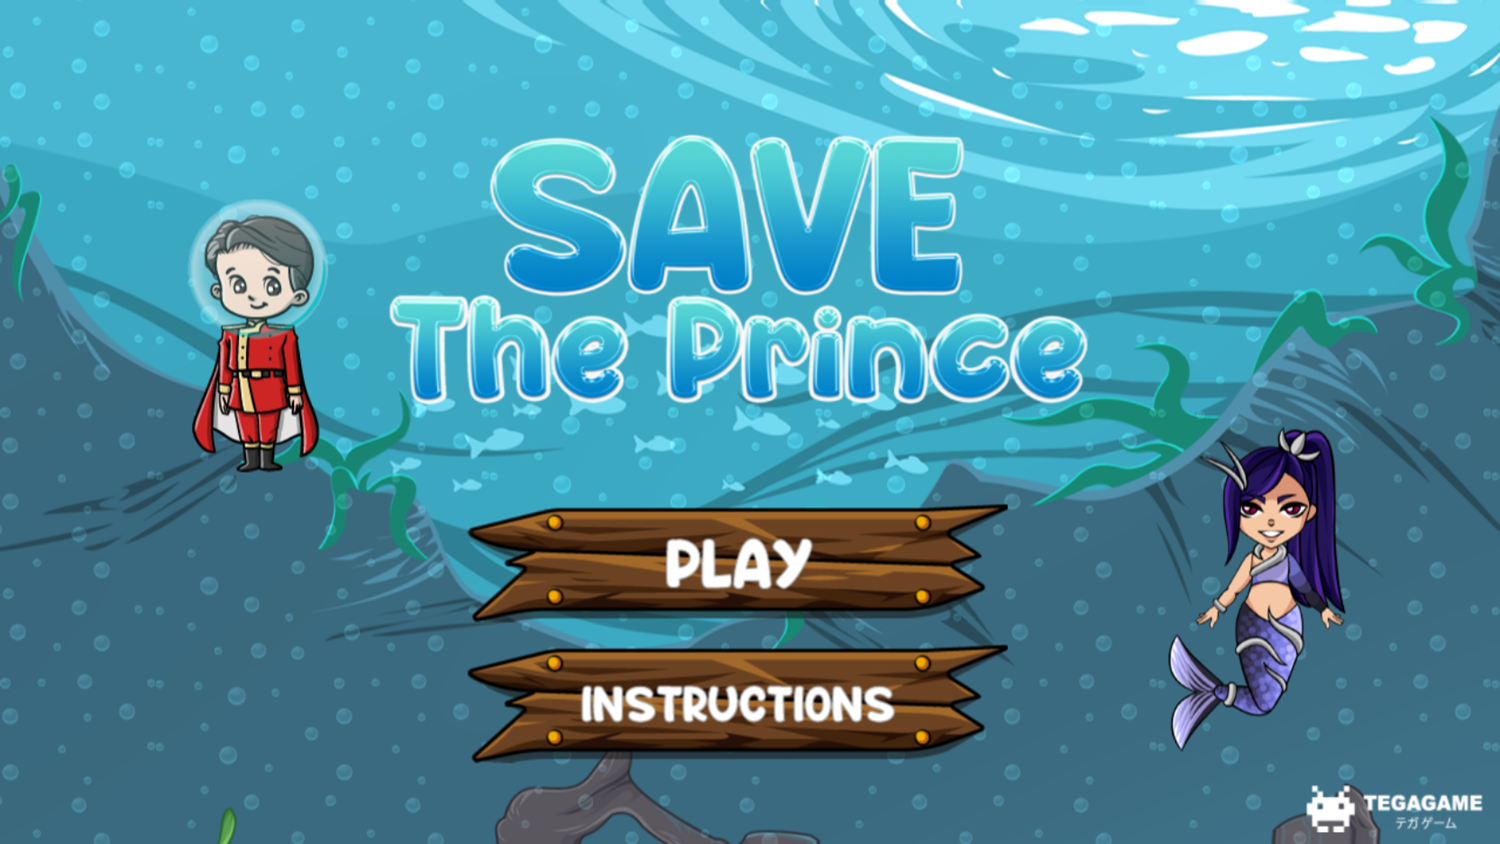 Save The Prince Game Welcome Screen Screenshot.